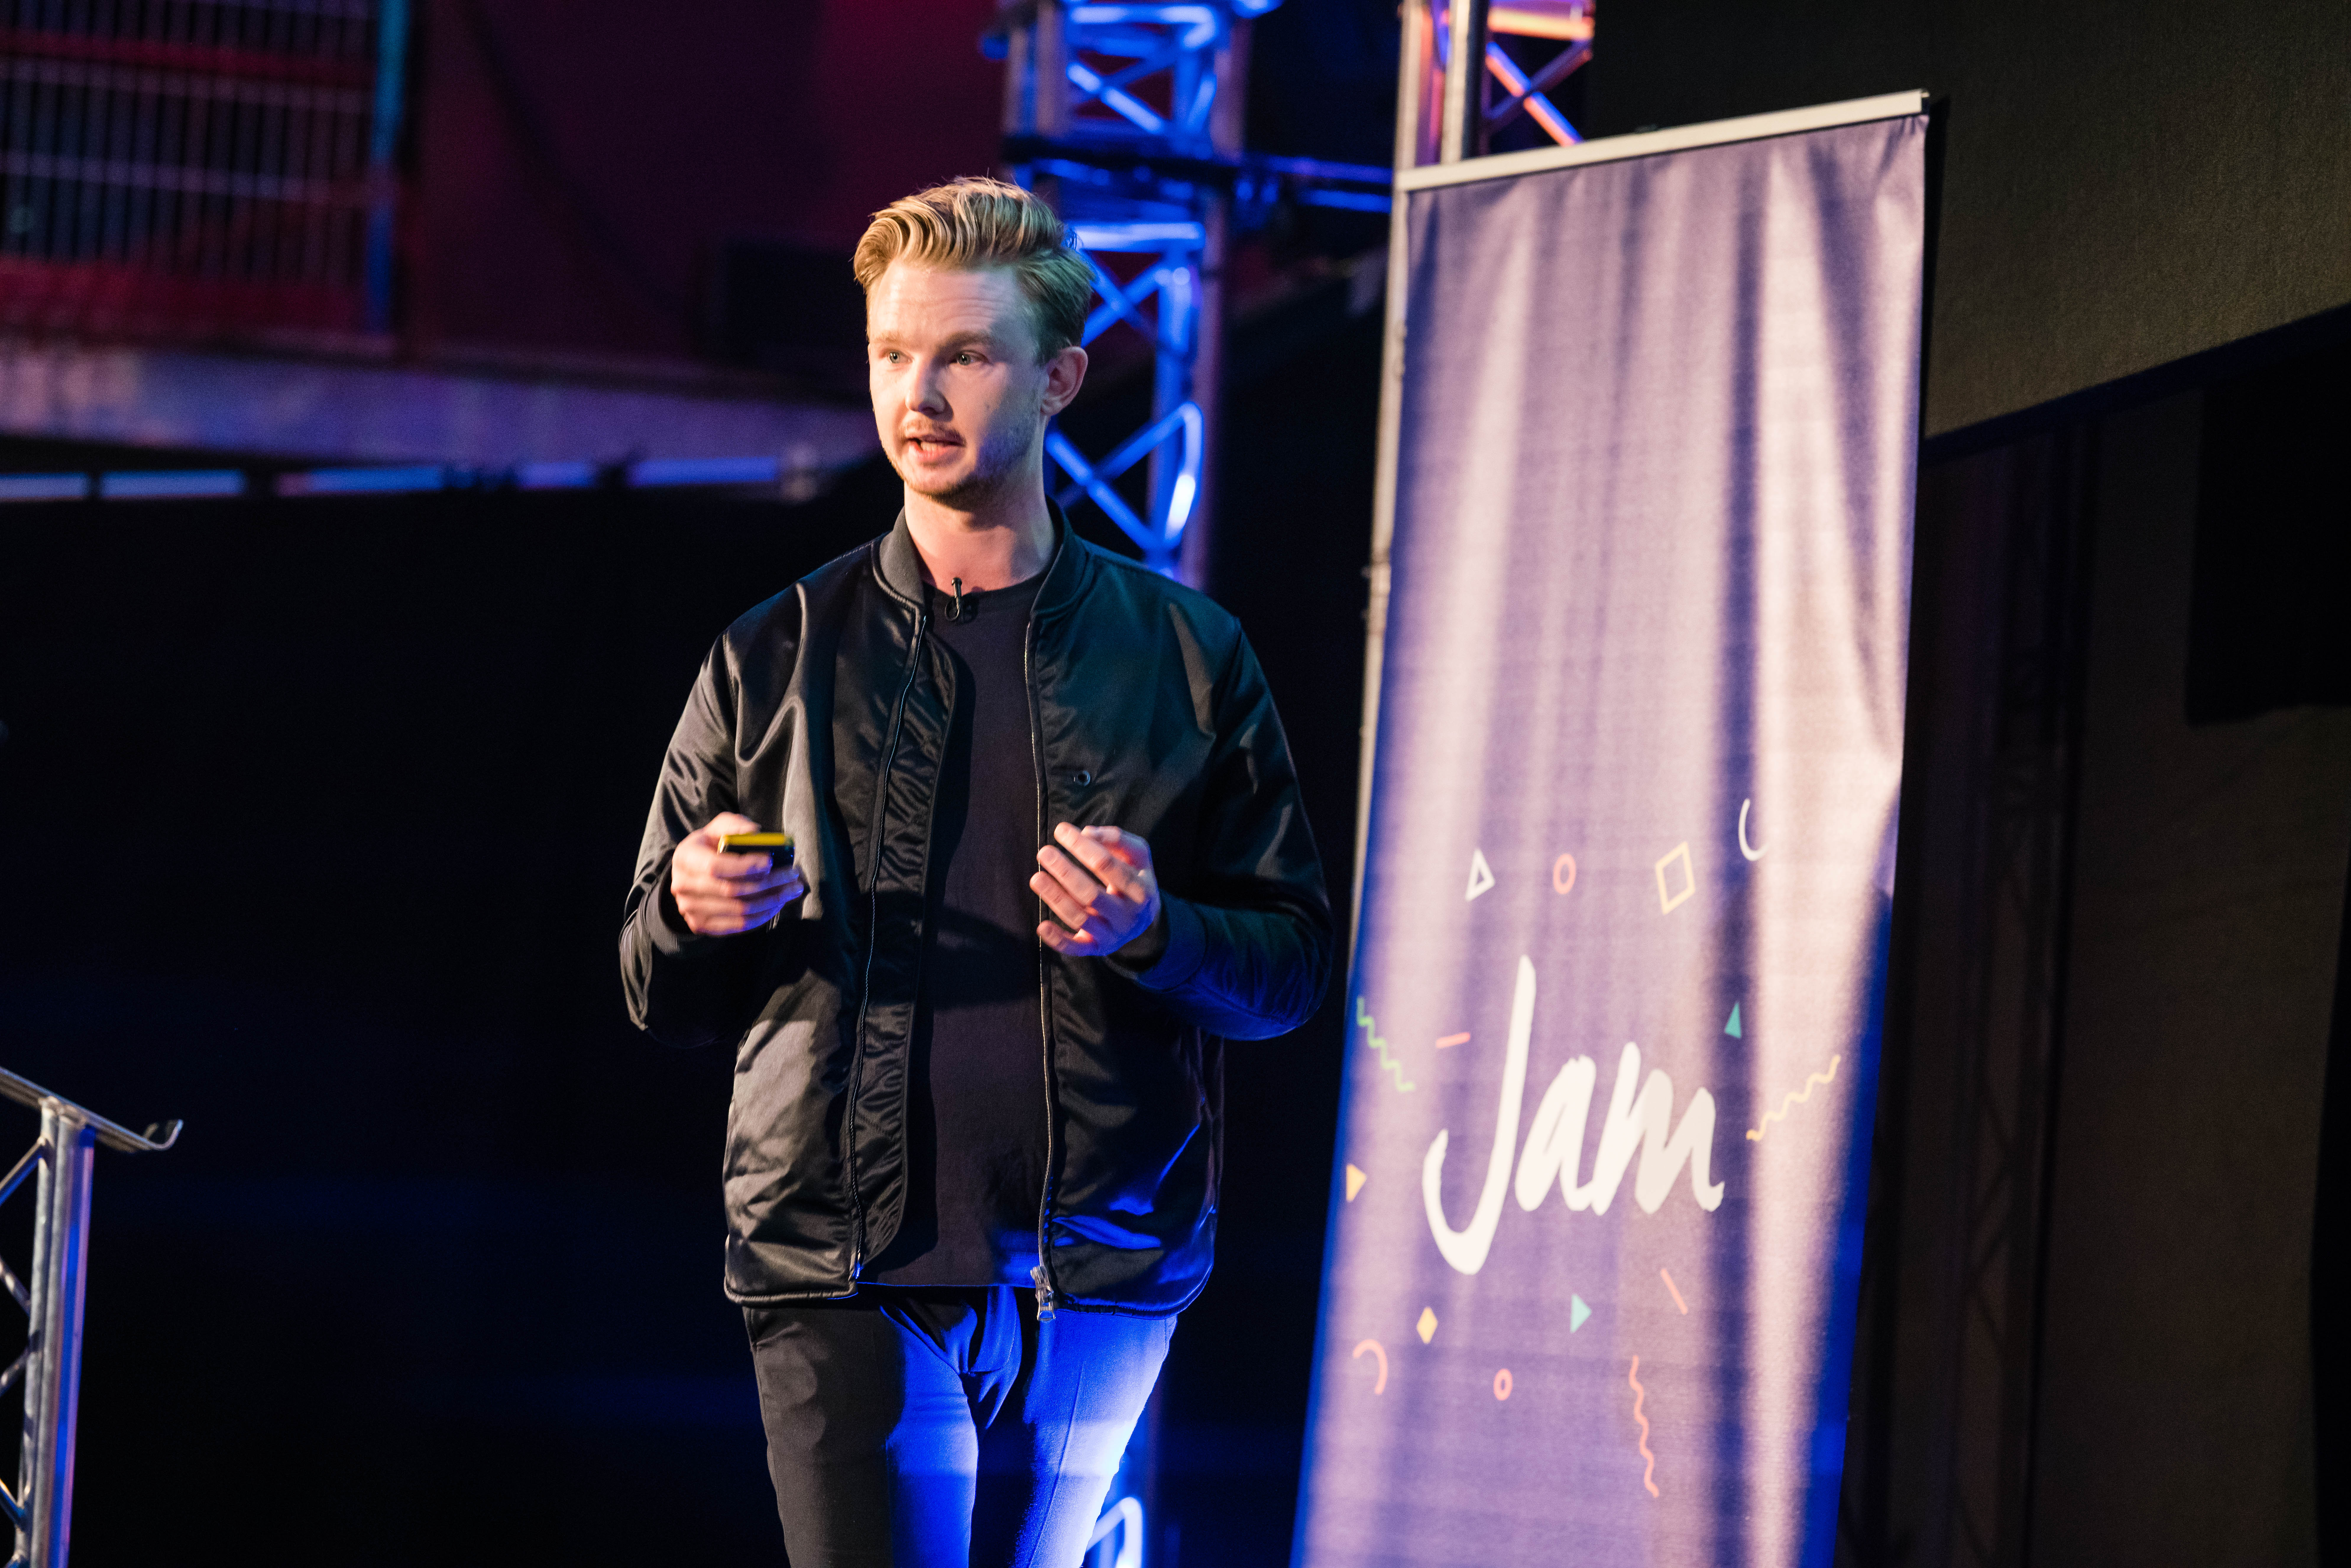 Peakon talk about building a SaaS platform at JAM 2017